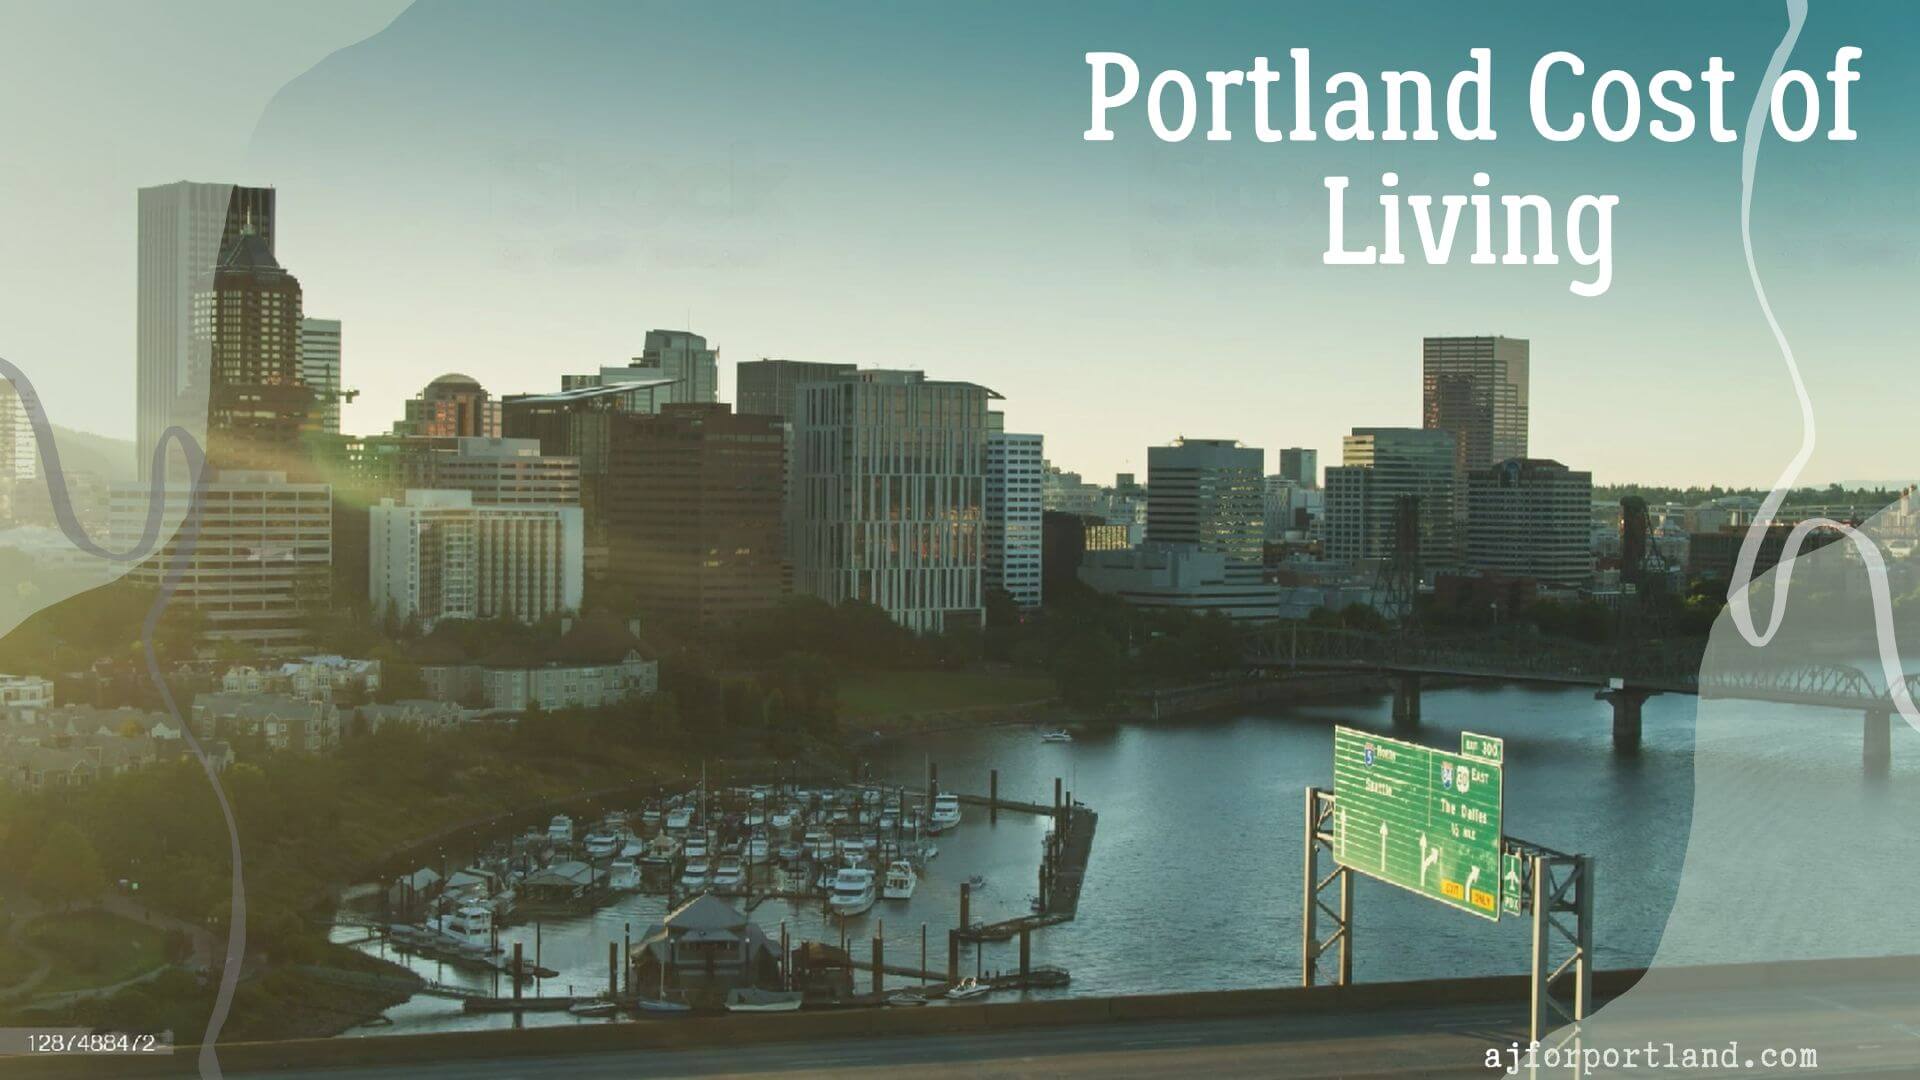 Portland Cost of Living